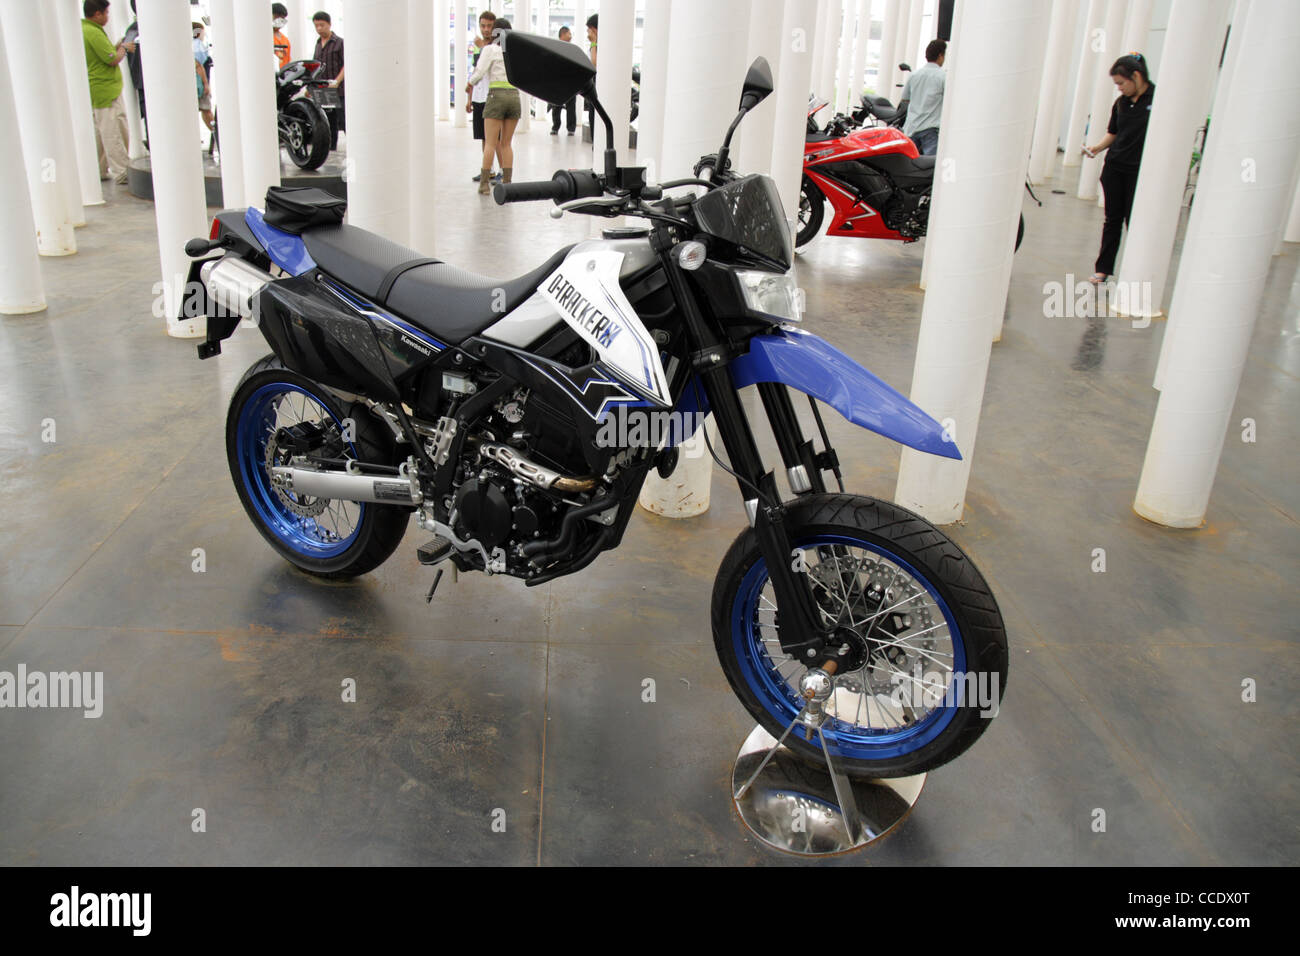 Kawasaki d 250 bike stock and images -